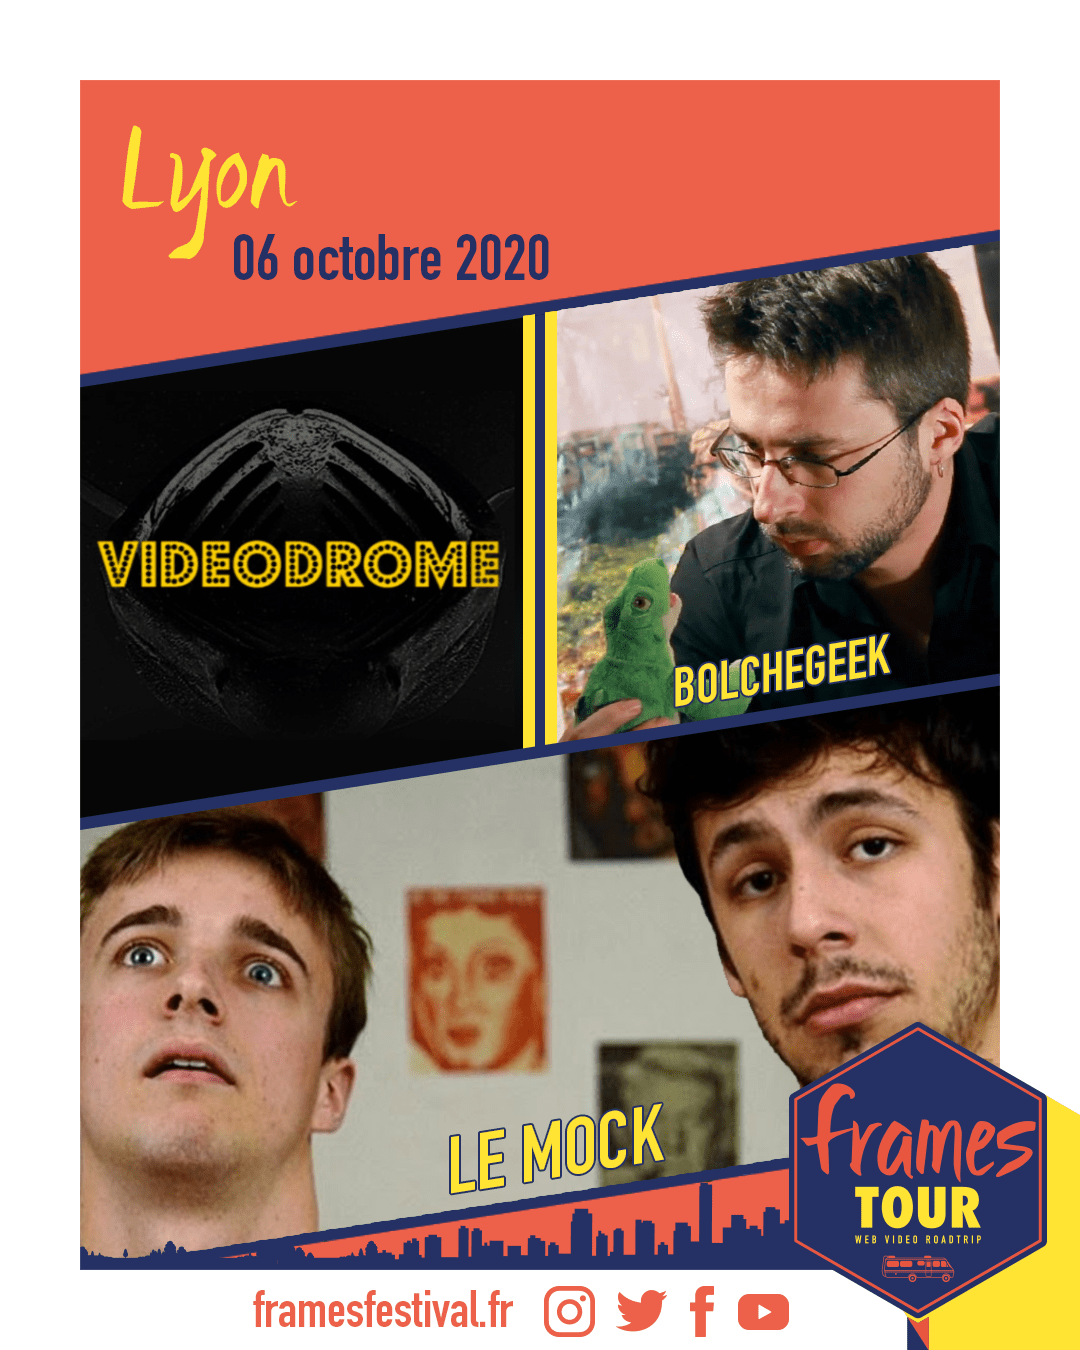 Frames 2020, programmation Lyon avec les chaînes Youtube Videodrome, Bolchegeek, Le Mock